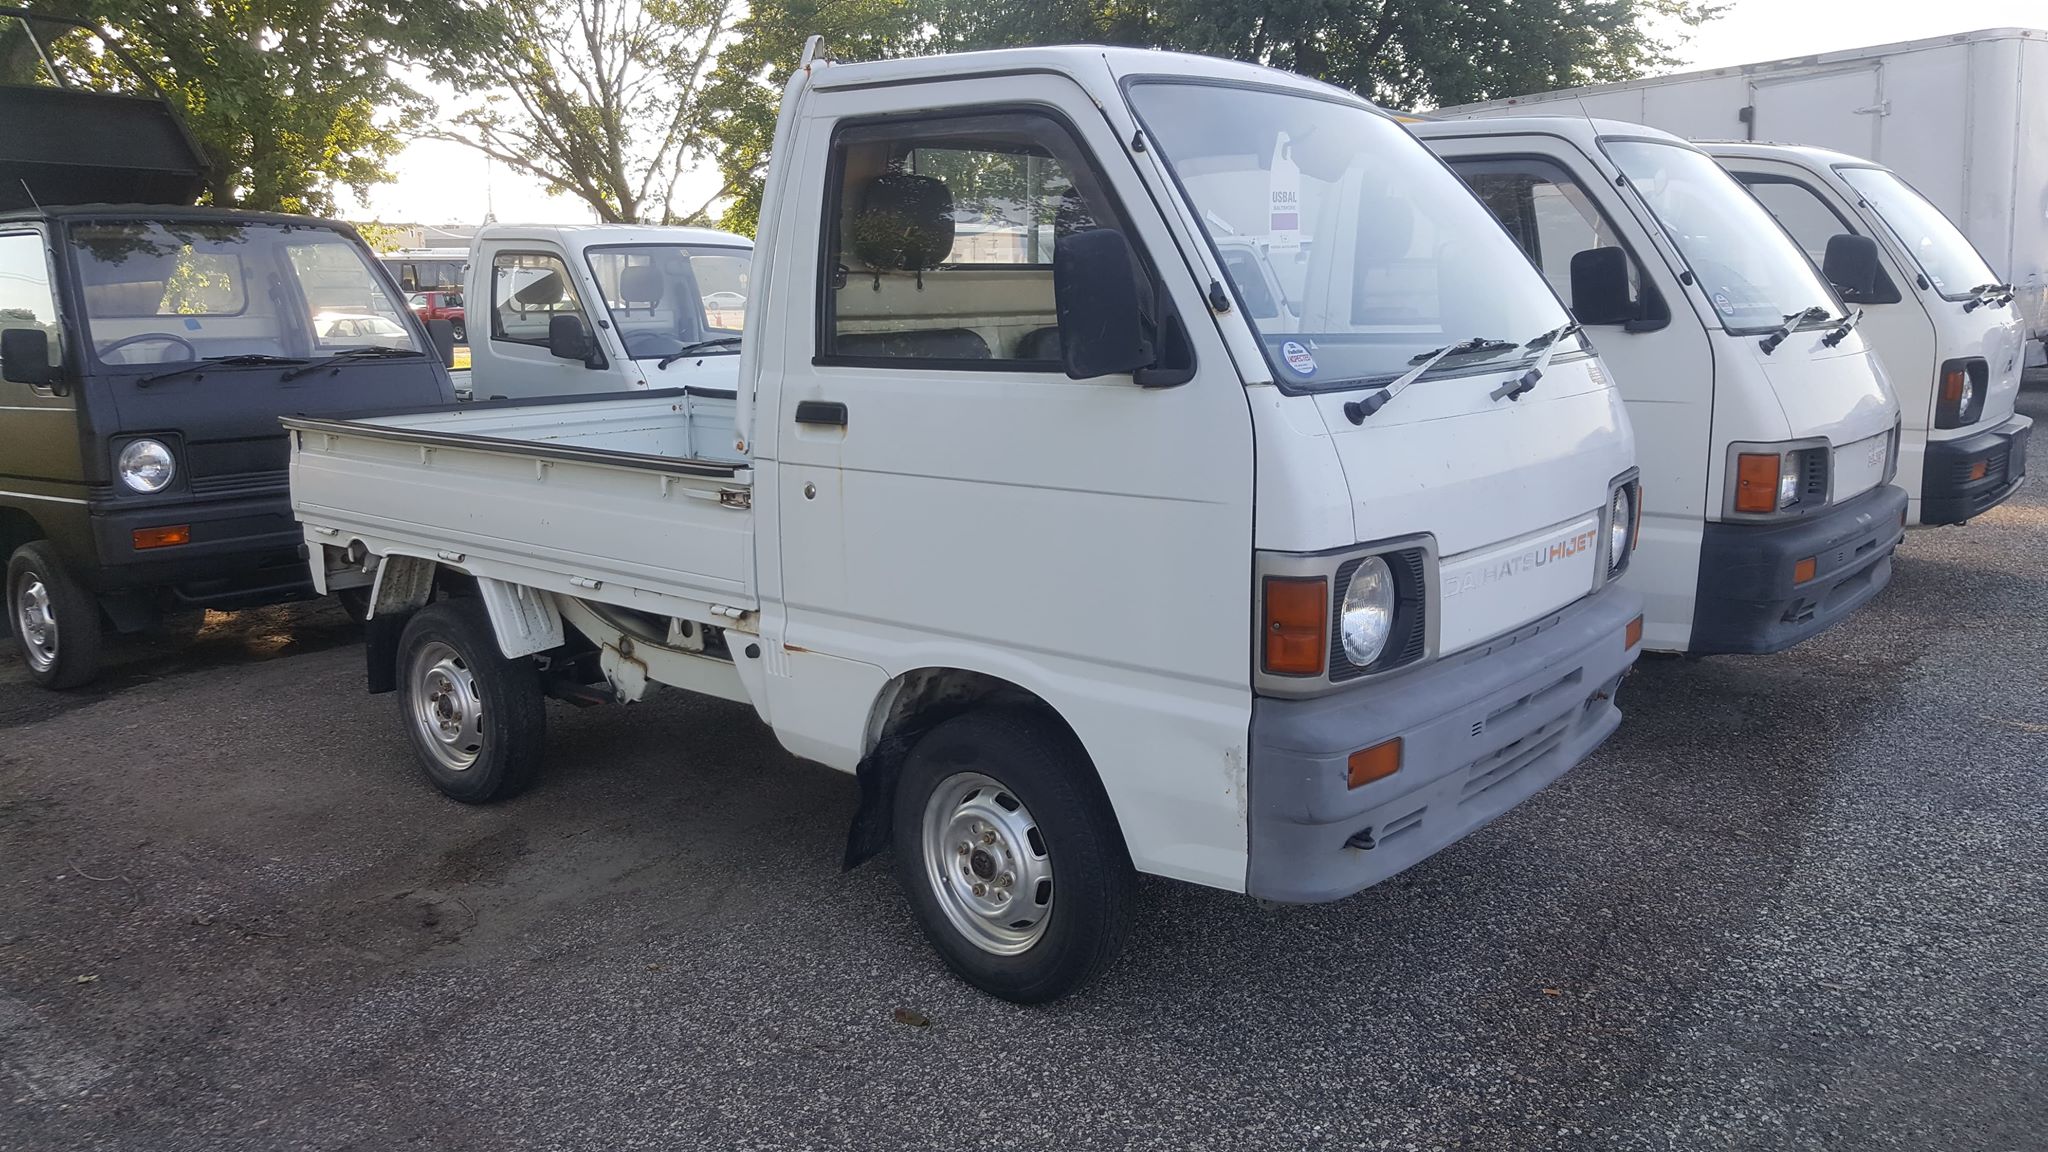 1987 Daihatsu Hijet 4WD - $5,300